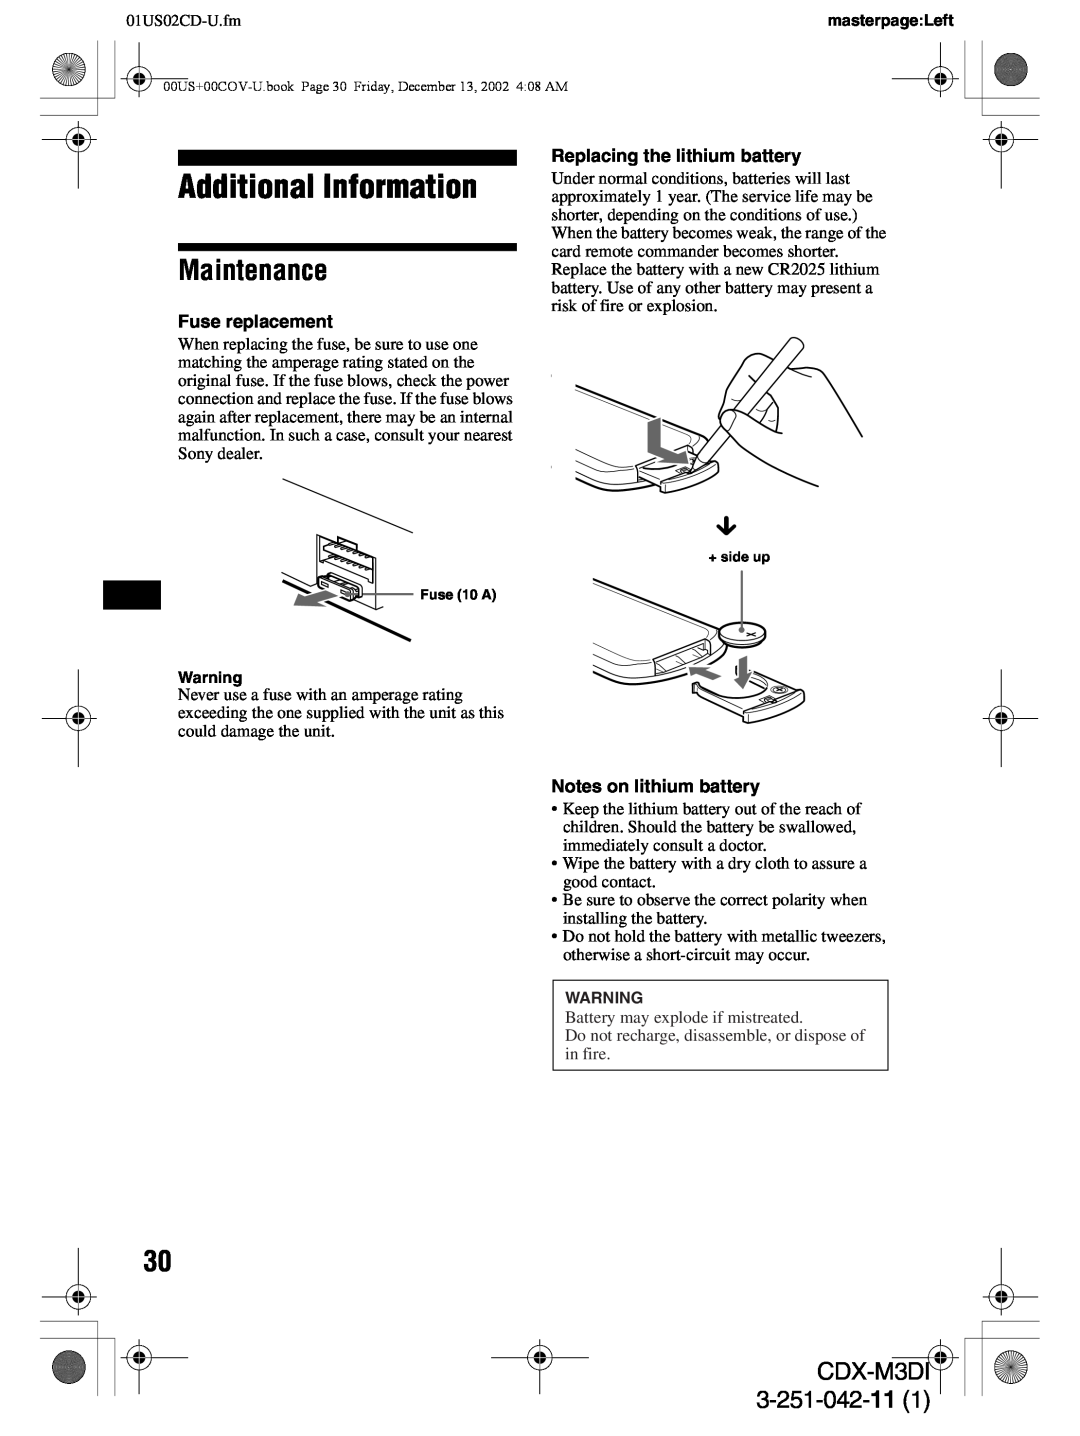 Sony CDX-M3DI operating instructions Additional Information, Maintenance, 3-251-042-11, 01US02CD-U.fm 